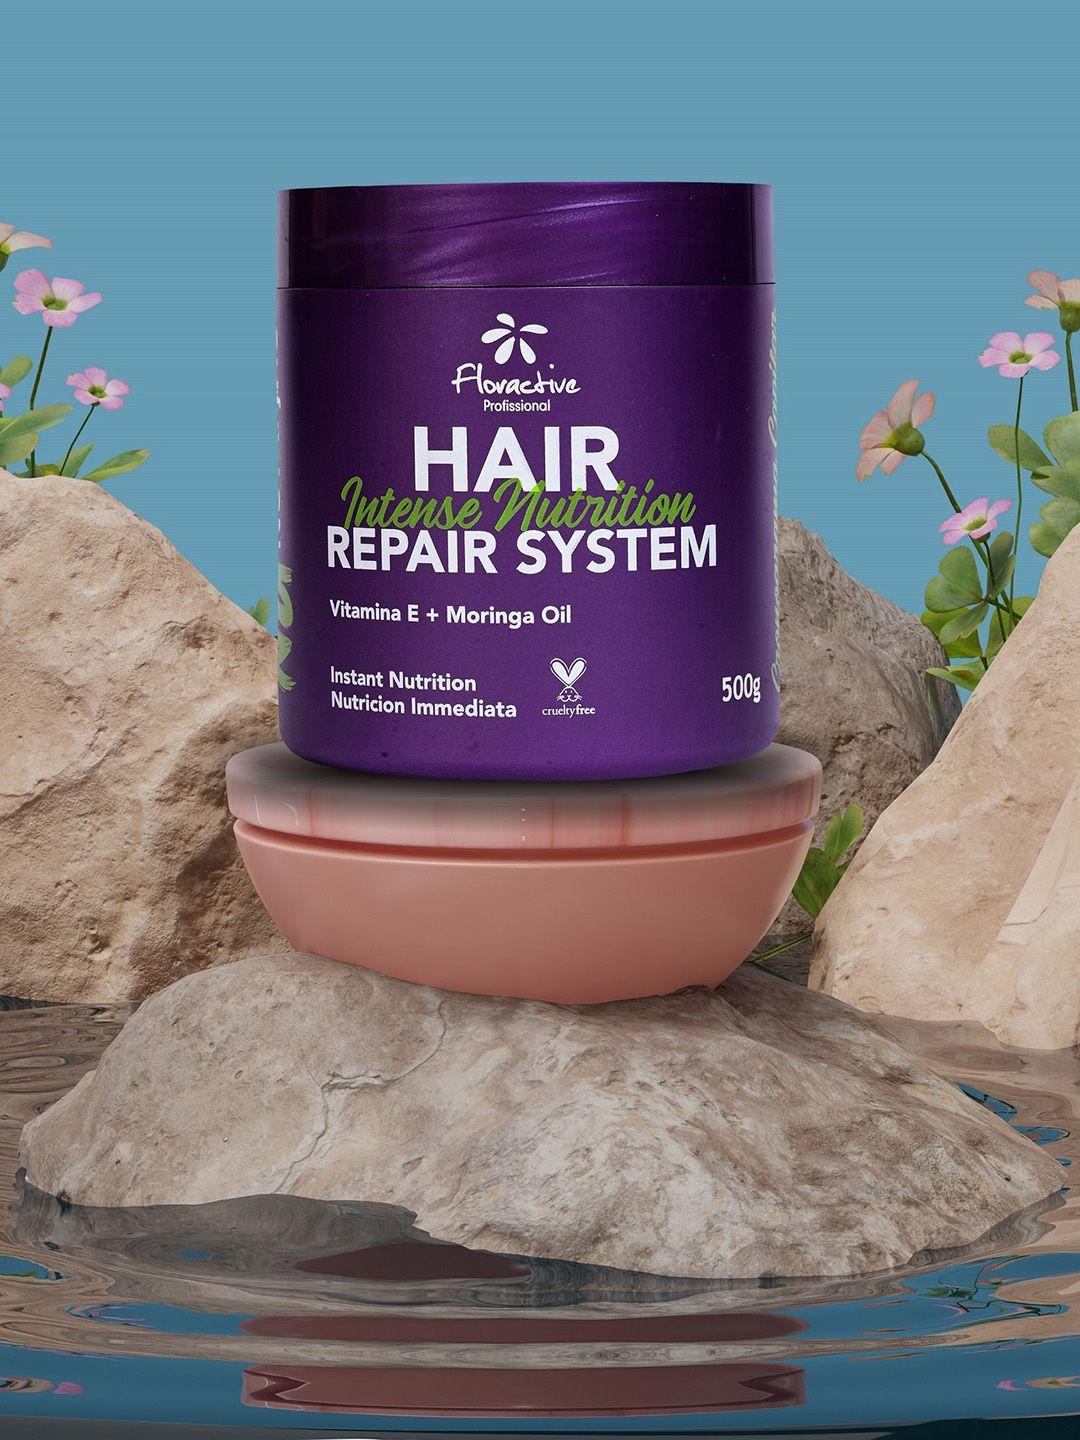 floractive professional intense nutrition hair repair system ritual treatment mask - 500g